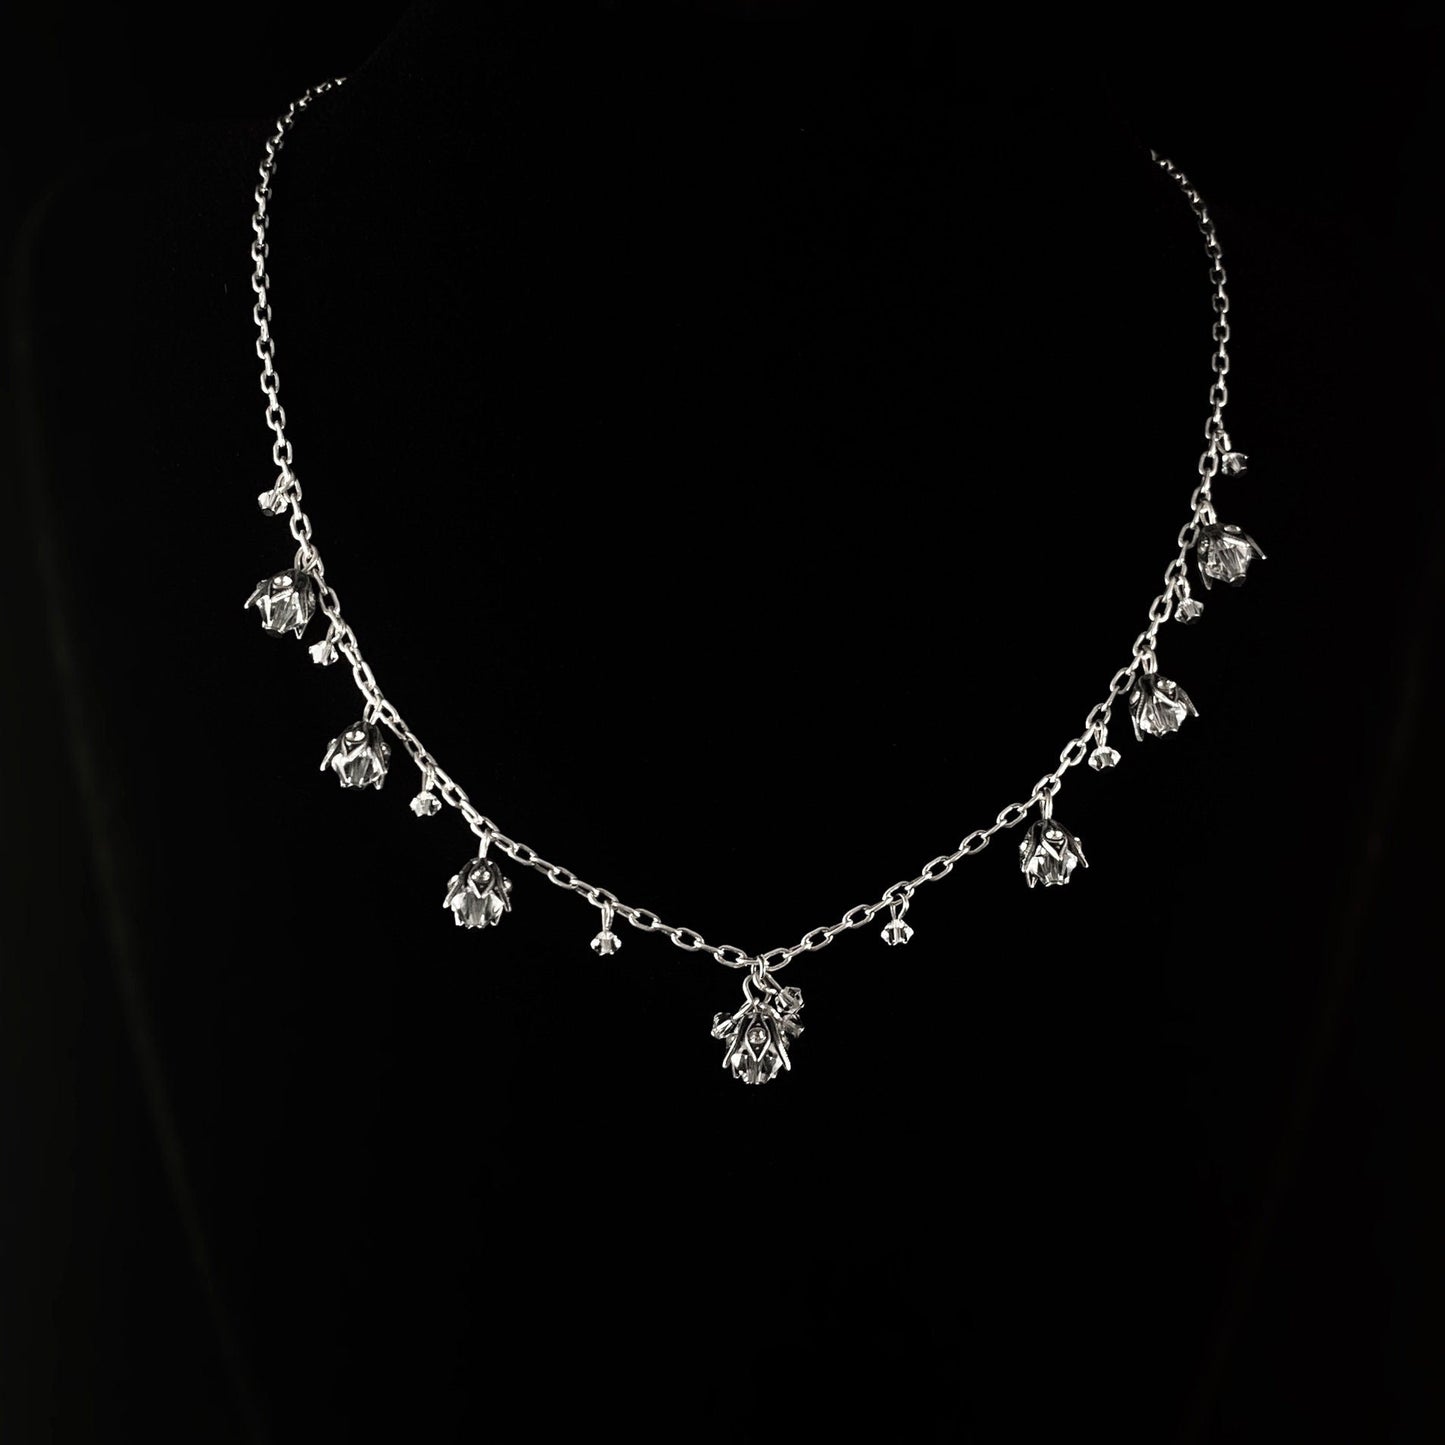 Delicate Lily of the Valley Swarovski Crystal Necklace - La Vie Parisienne by Catherine Popesco